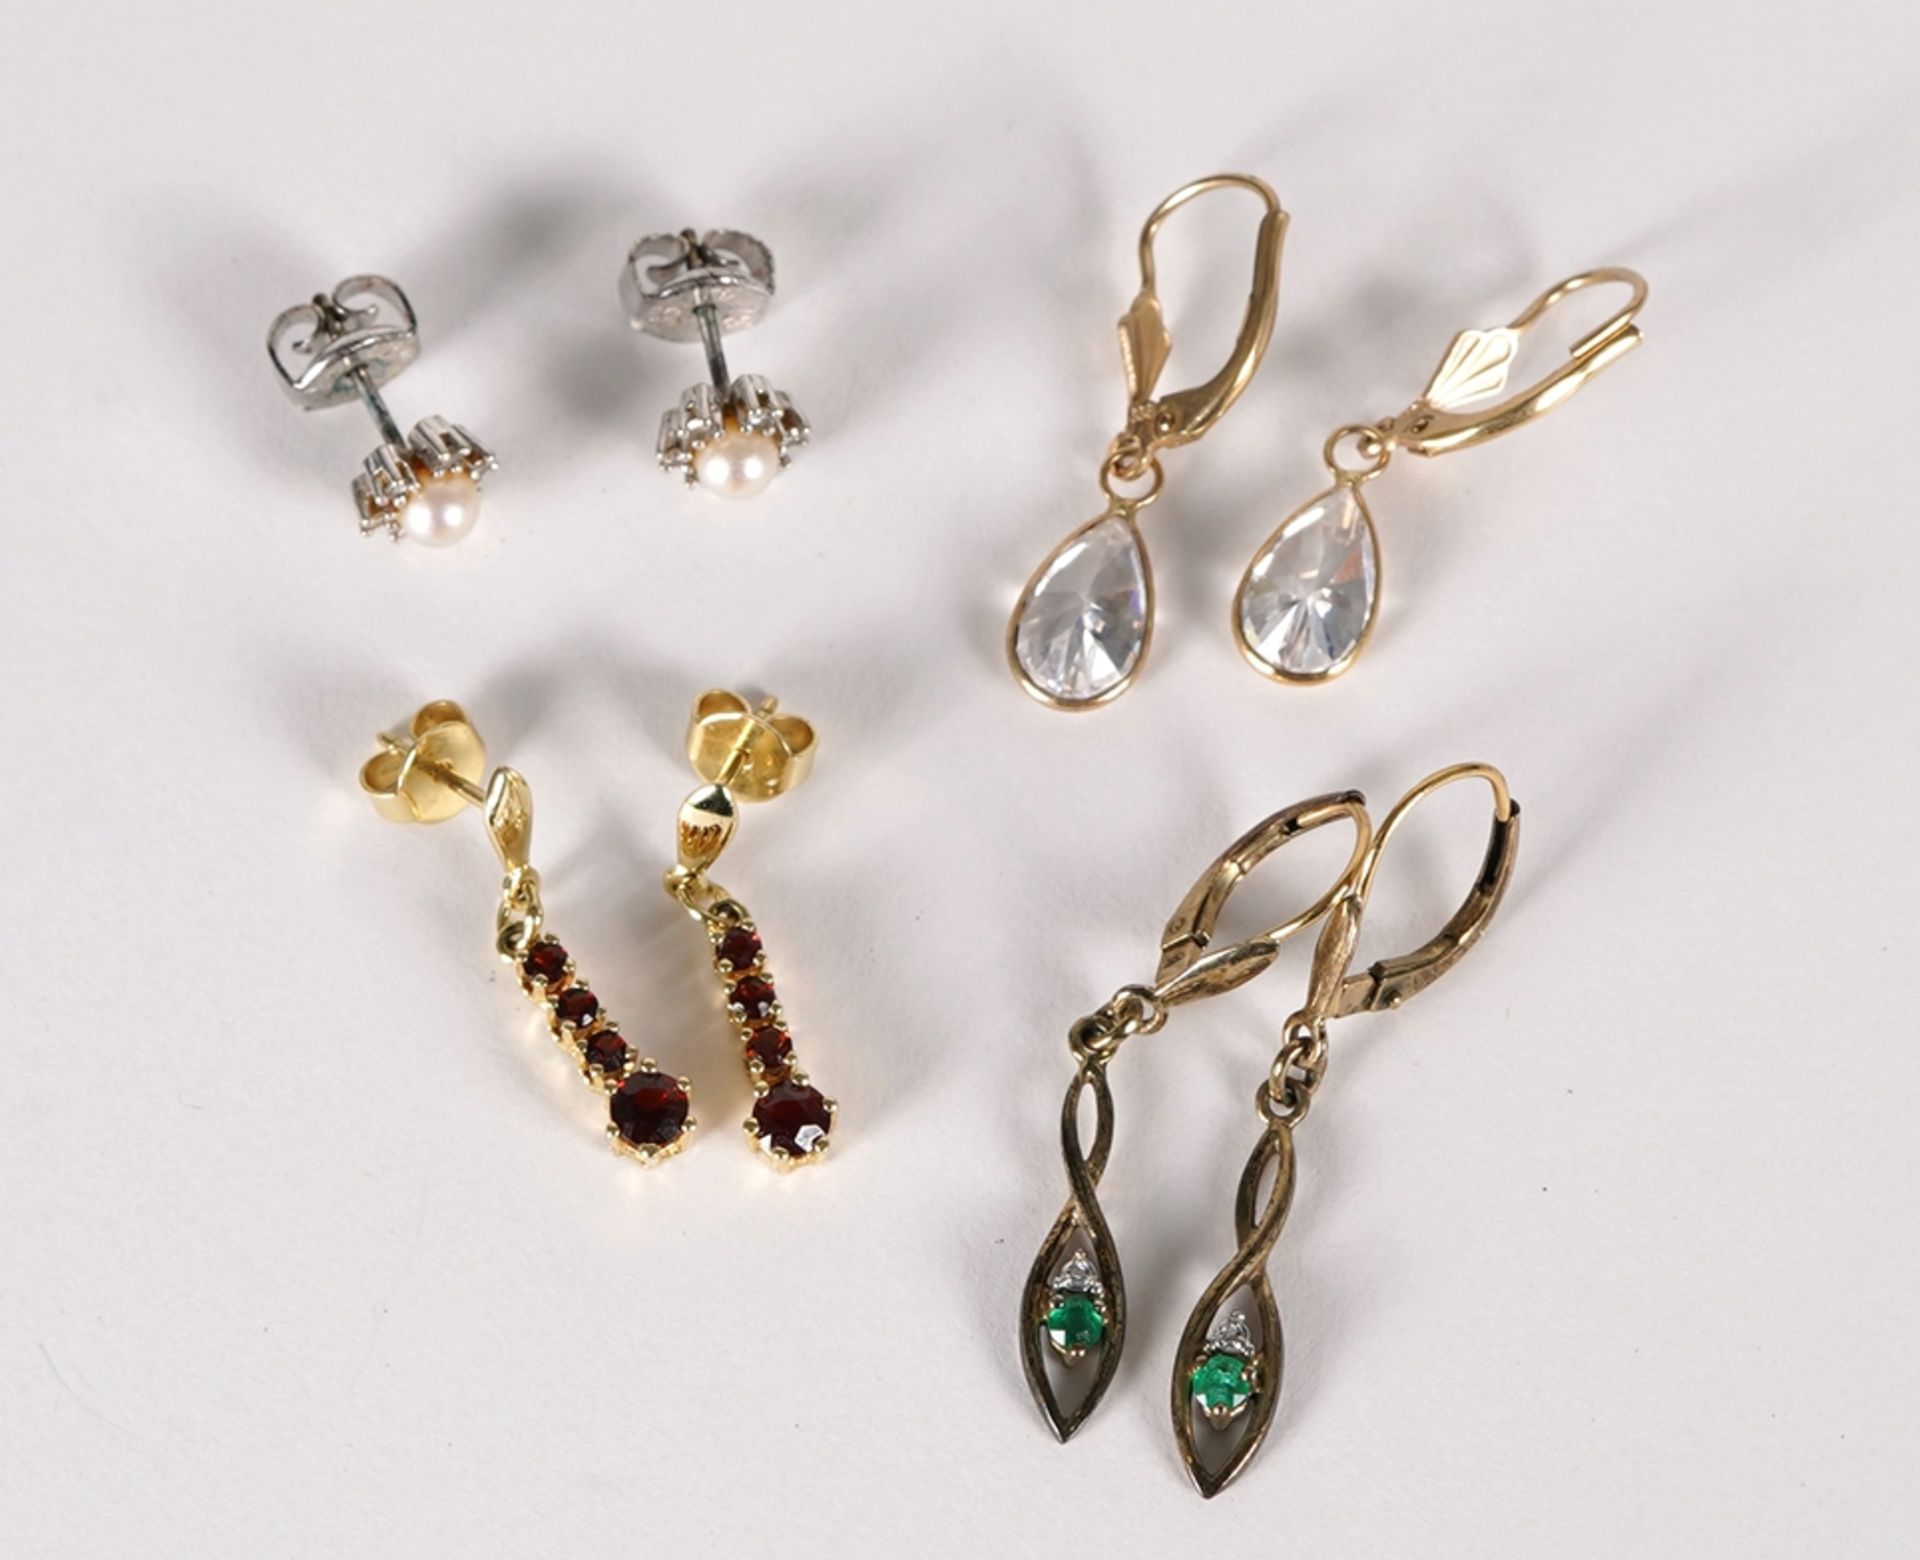 Assorted ear jewellery